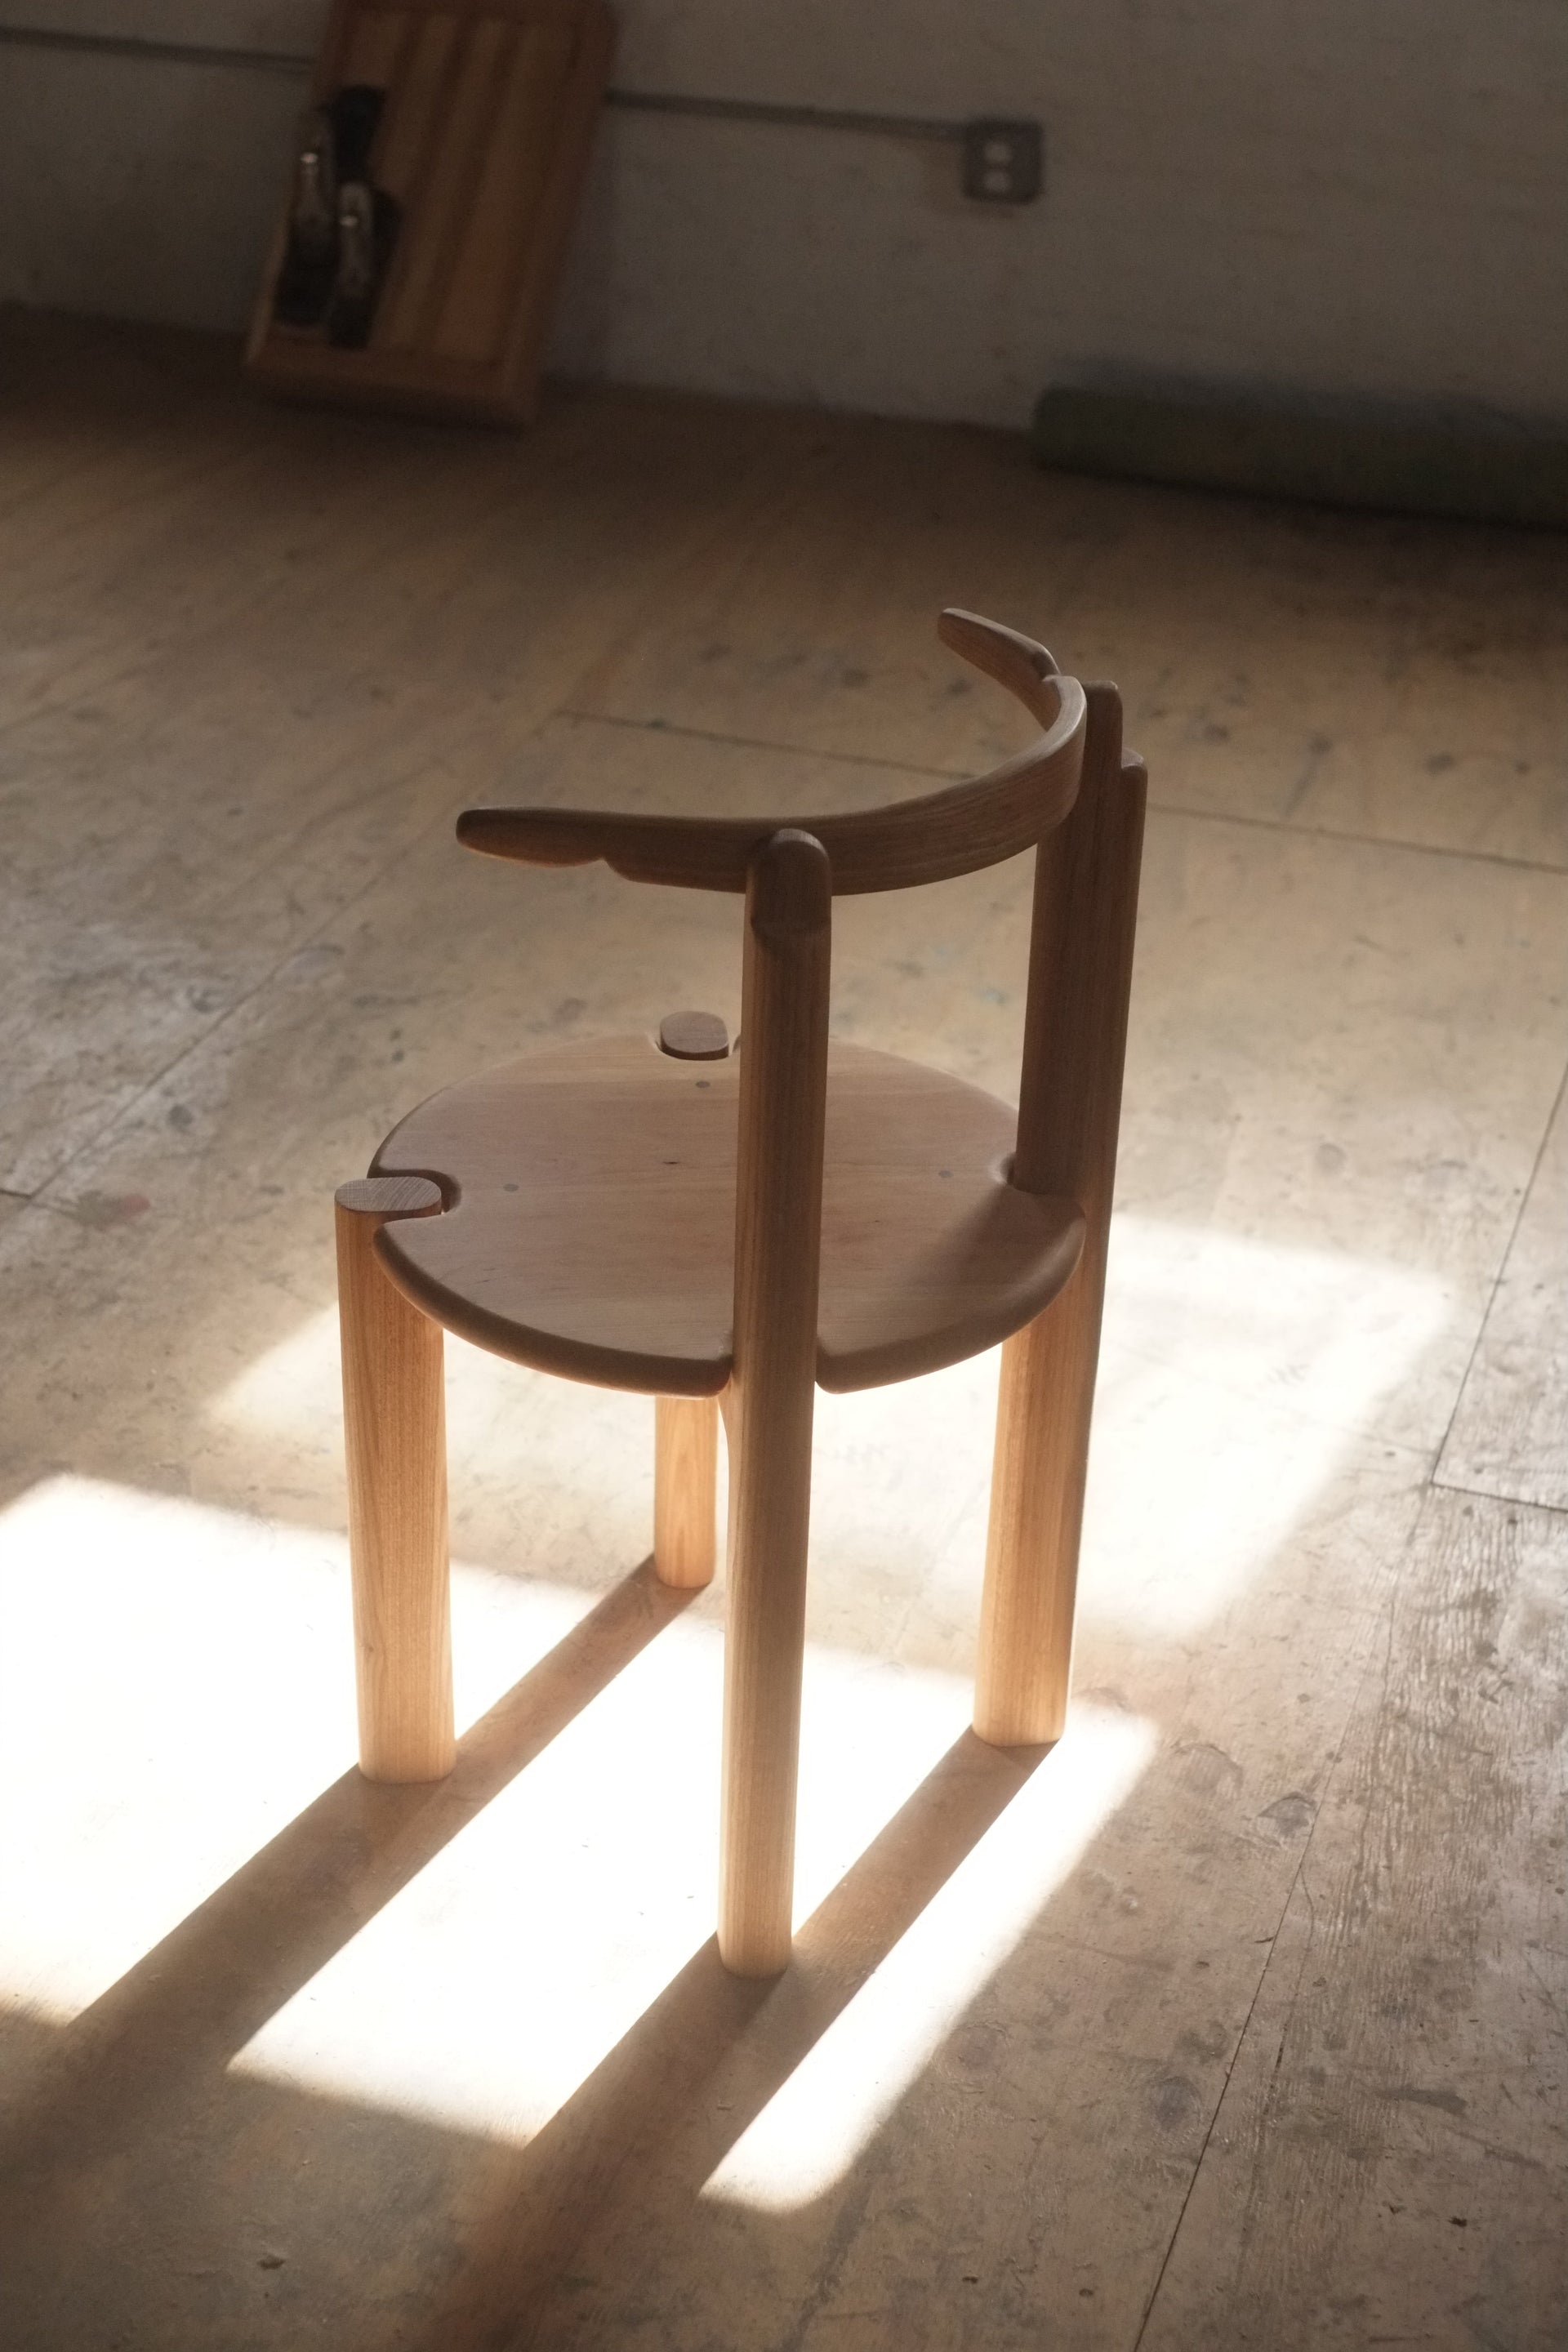 RENT: Zitsn 2 Chair by Aidan Elias